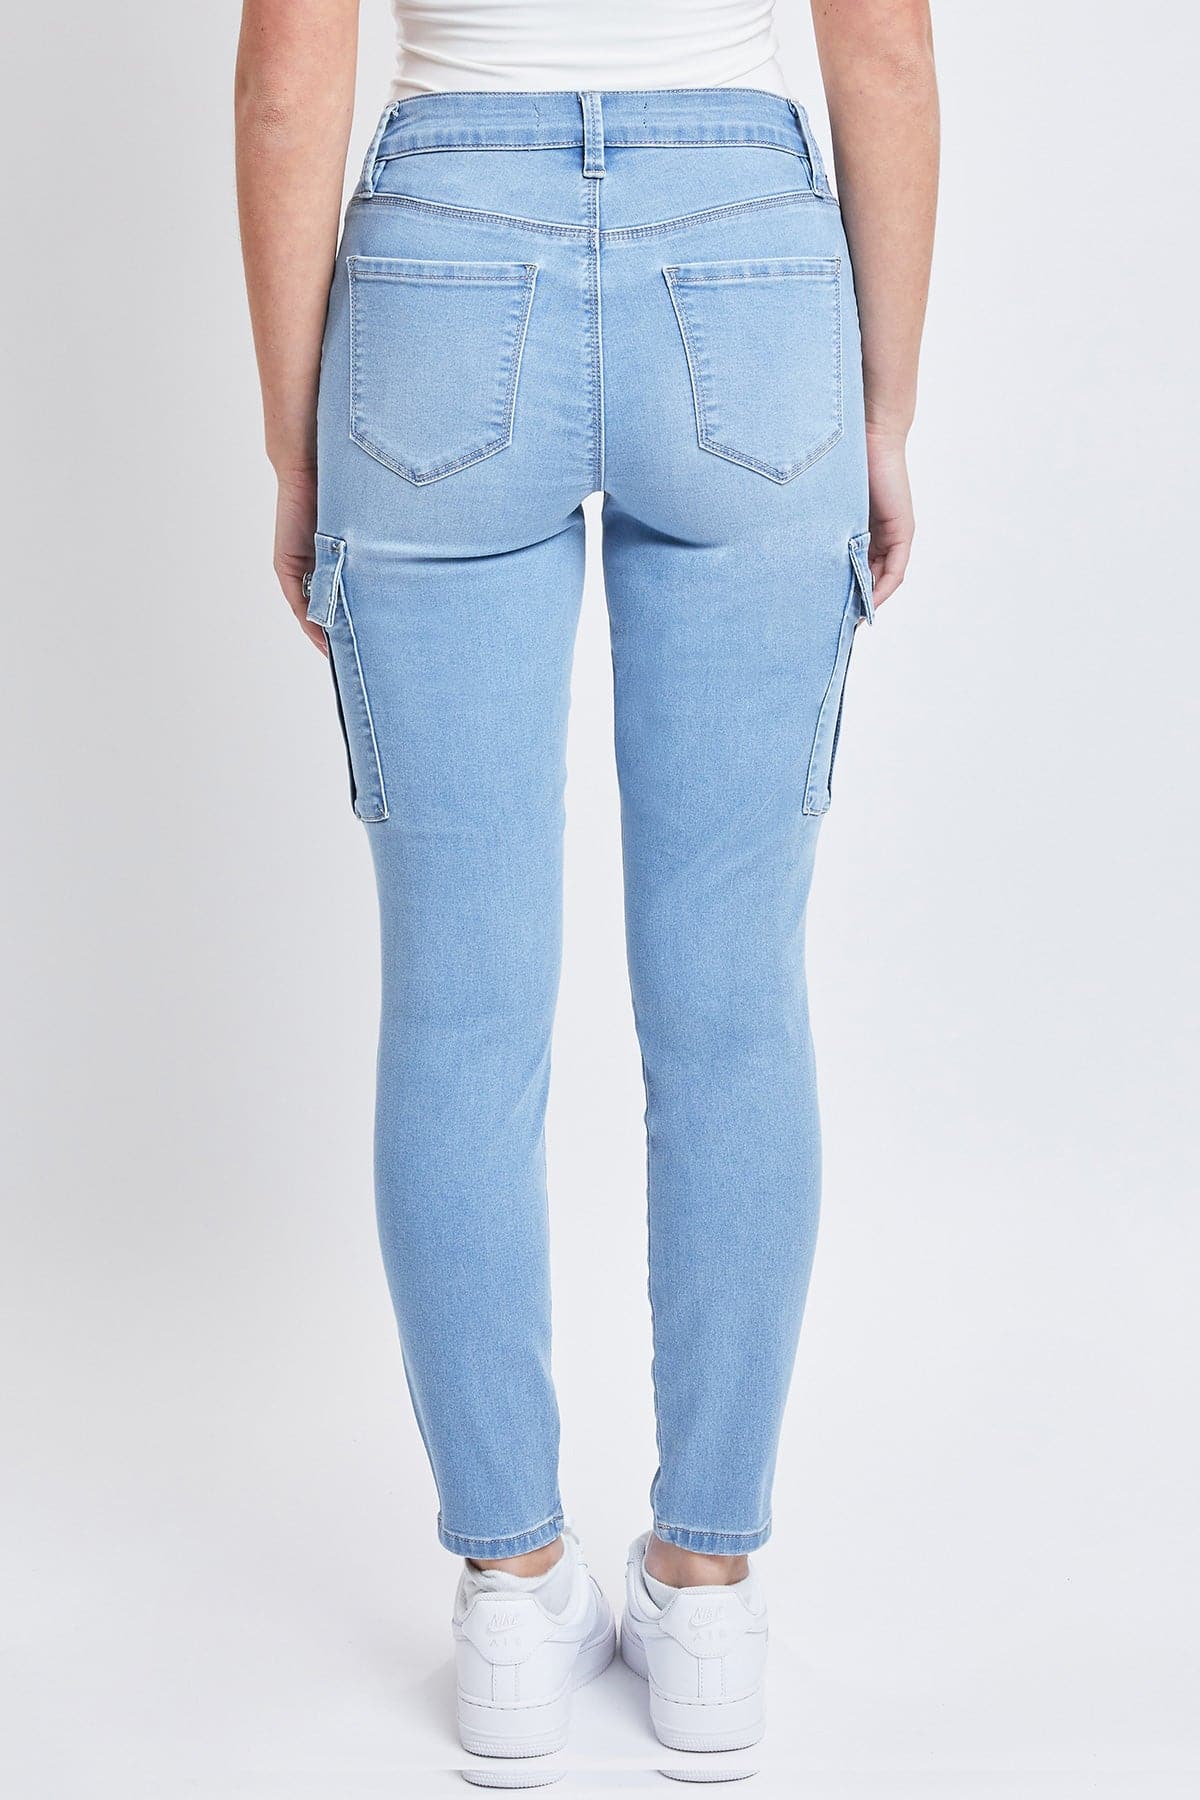 Women's Essential Hyperdenim Skinny Cargo Jeans